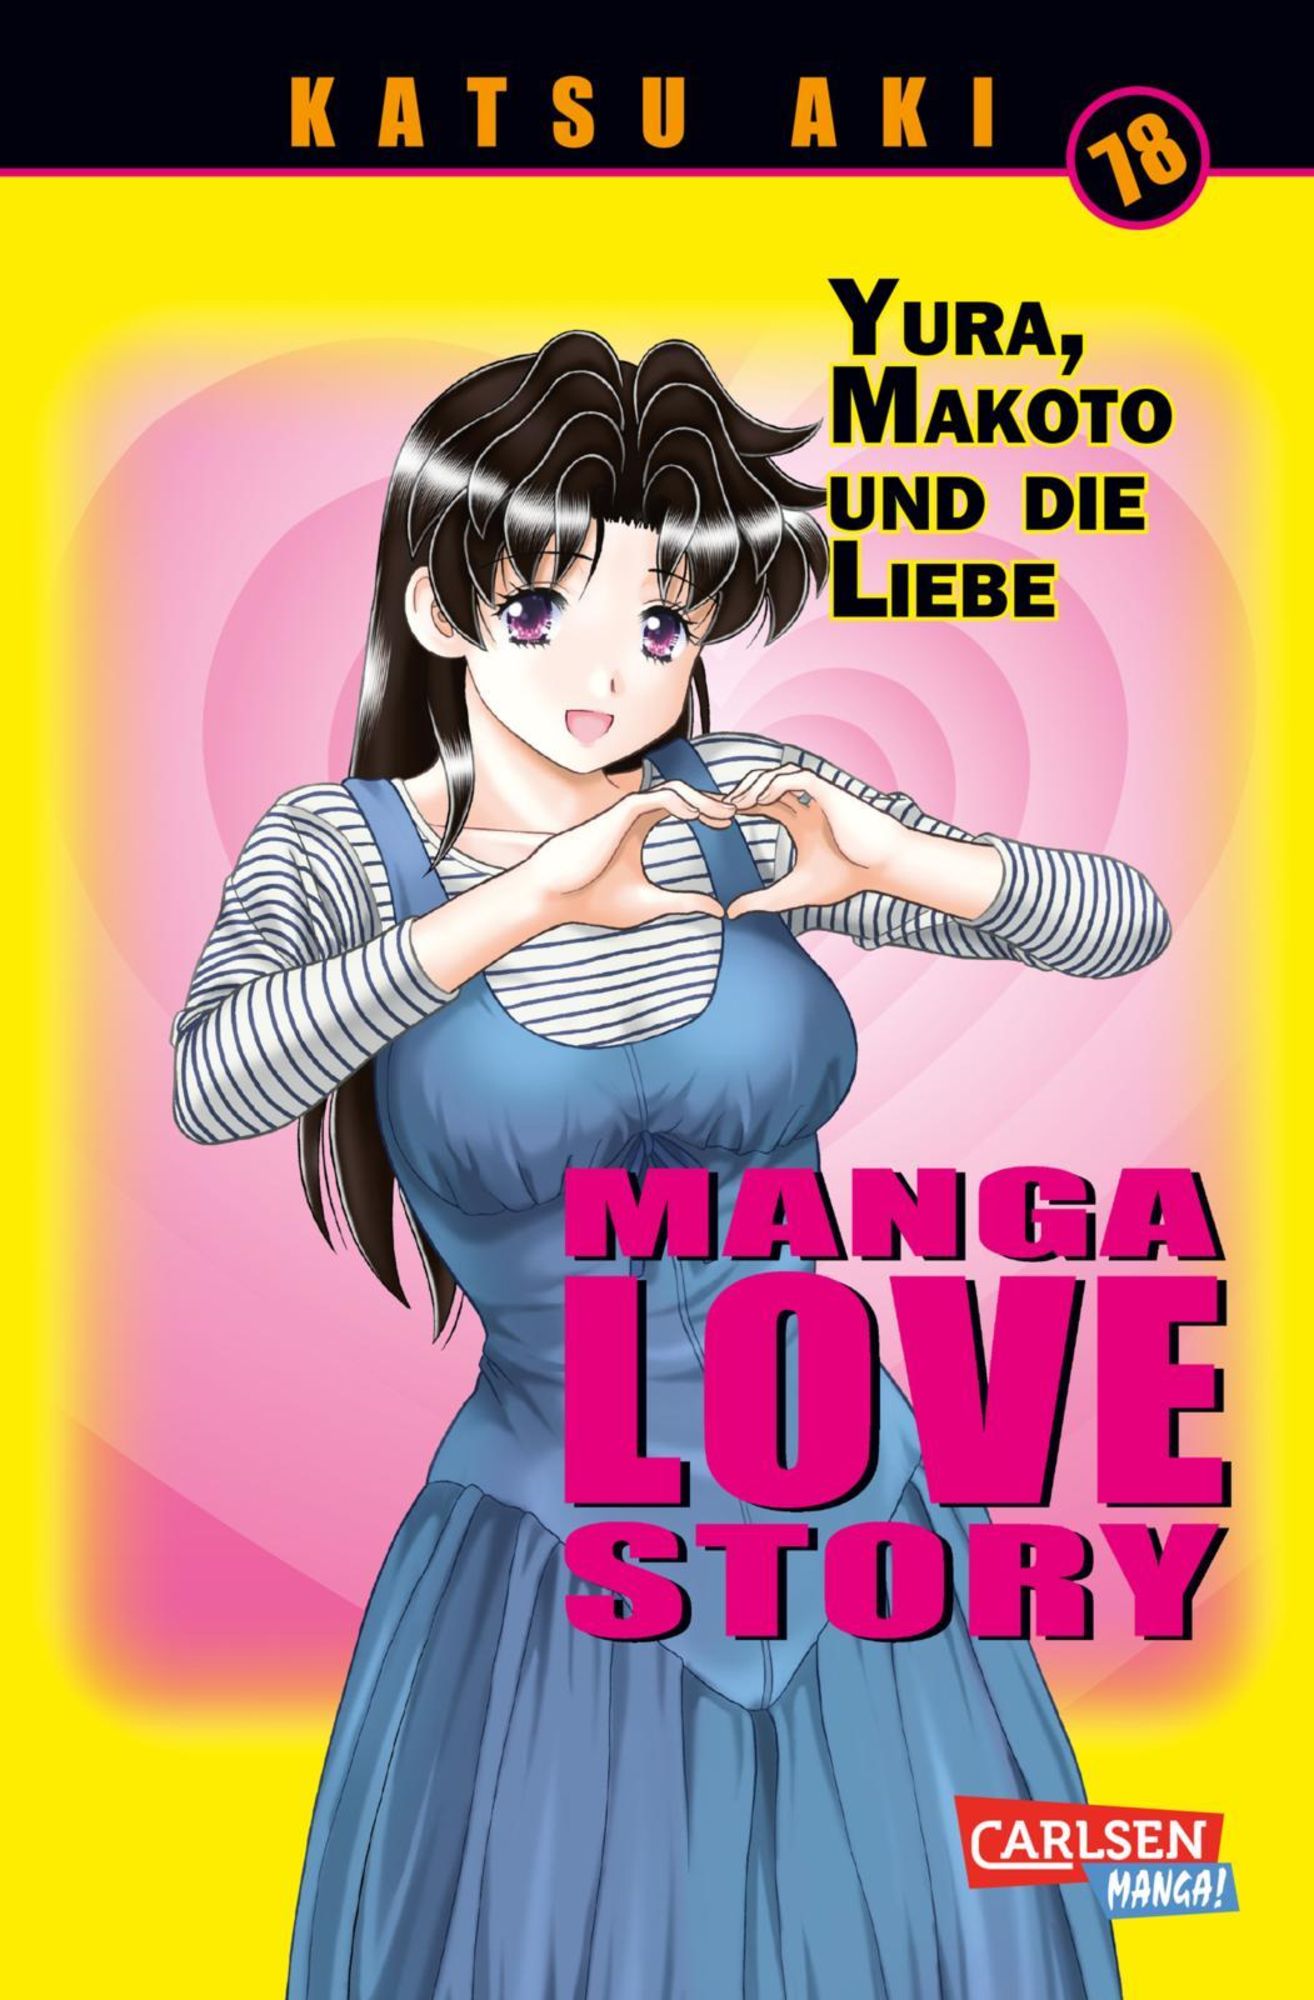 Médico esperanza secuencia Manga Love Story 78 von Katsu Aki - Buch | Thalia